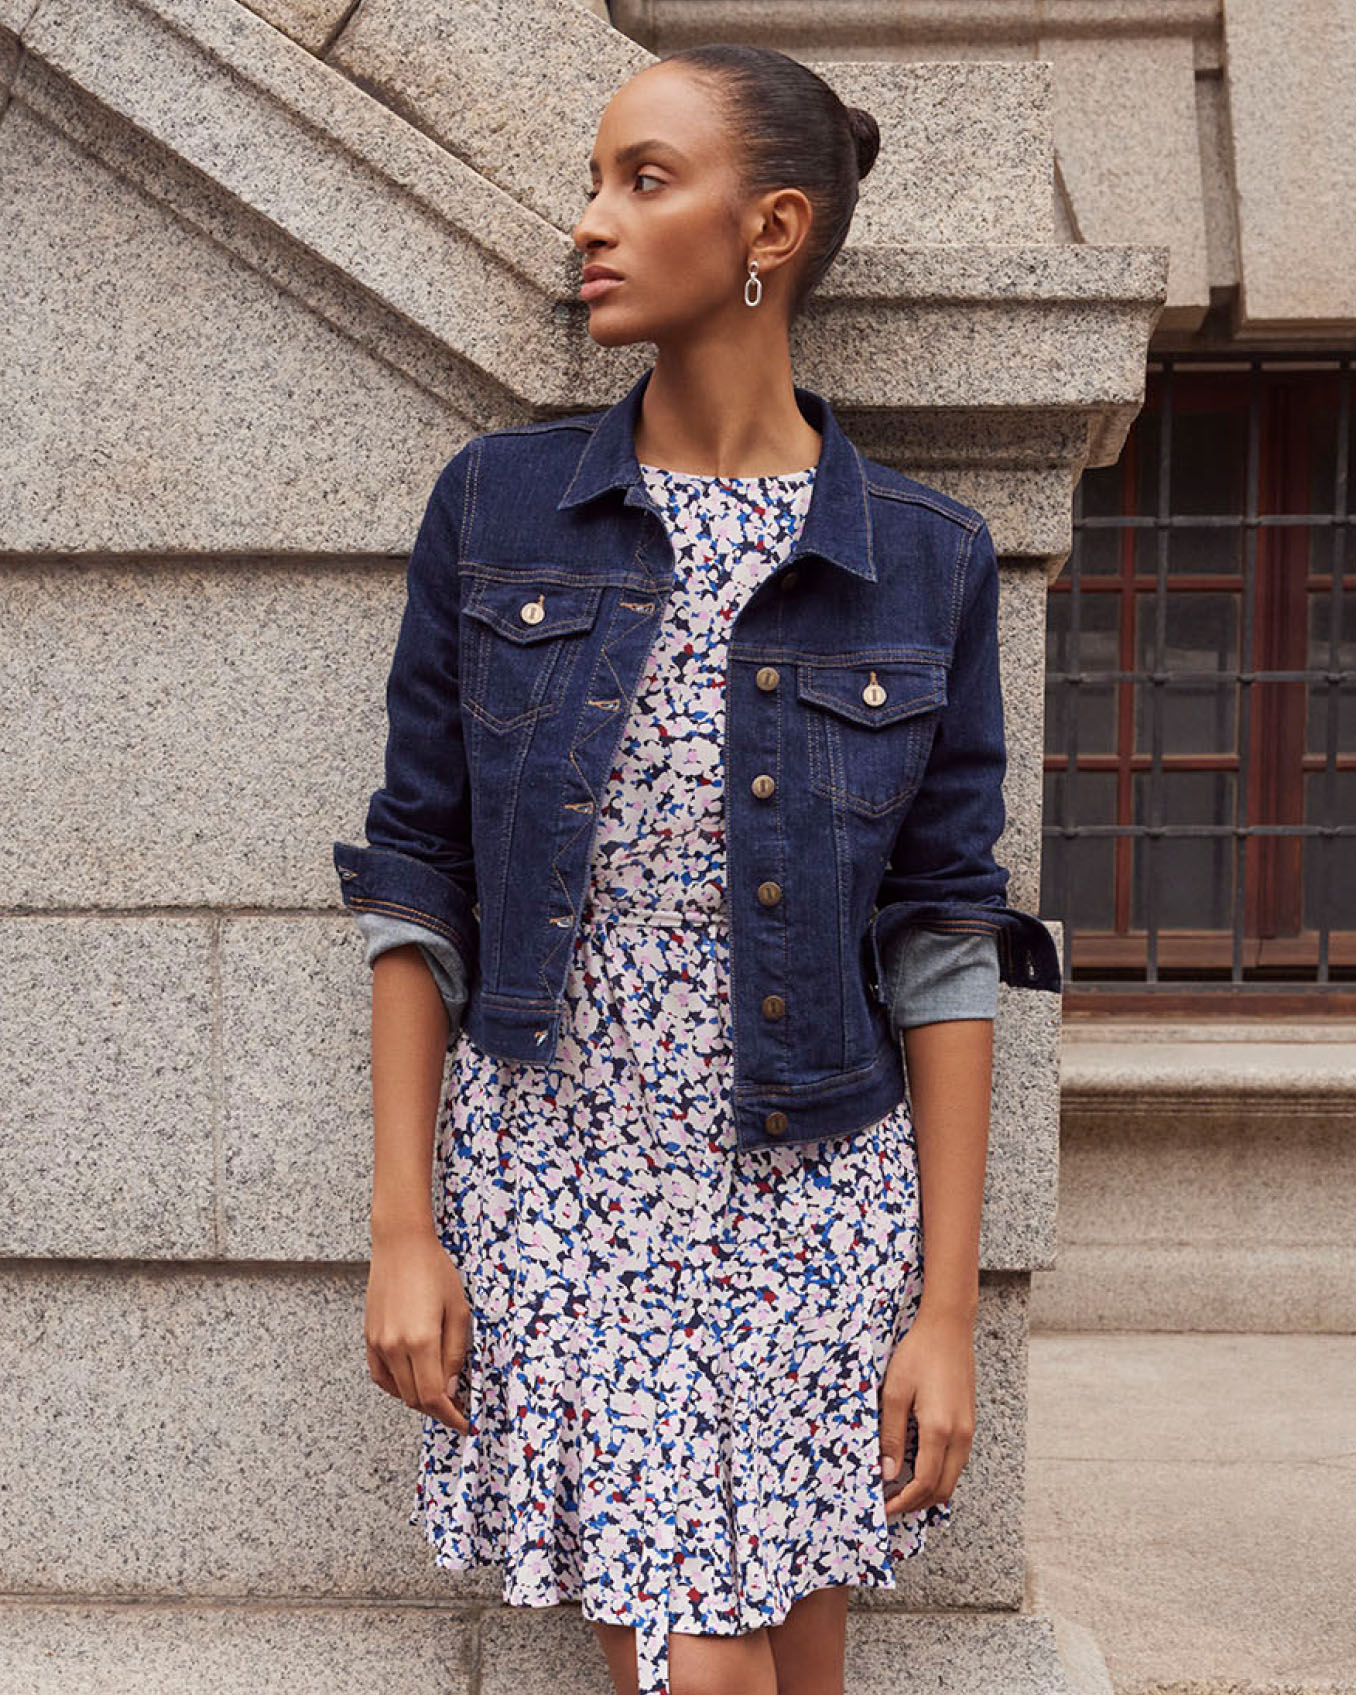 Hobbs model wears an indigo denim jacket layered over a floral dress.